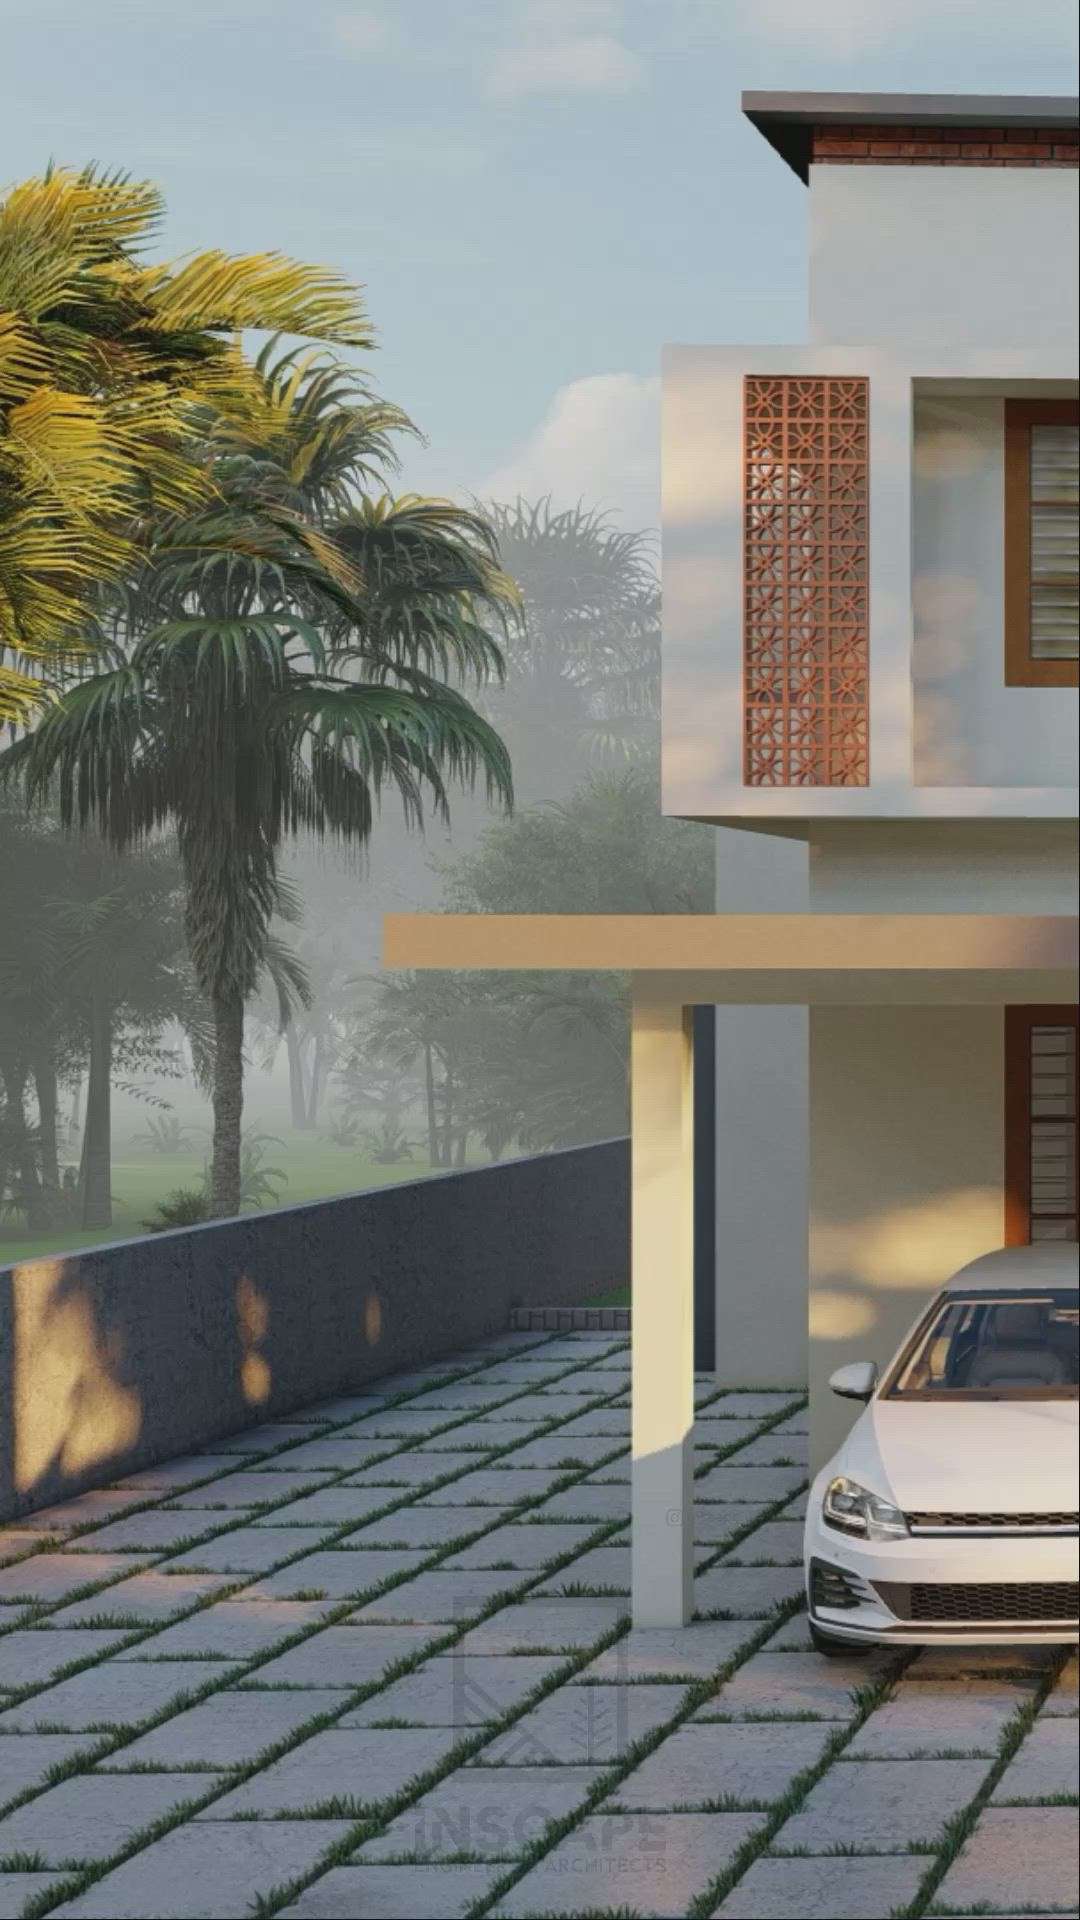 ONGOING RESIDENTIAL
LOCATION:PERAMBRA
.
.
.
 #KeralaStyleHouse  #keralaplanners  #keralahomedesignz  #SouthFacingPlan  #NorthFacingPlan  #keralatourism  #architecturedesigns  #CivilEngineer  #exteriordesigns  #3DPlans  #InteriorDesigner